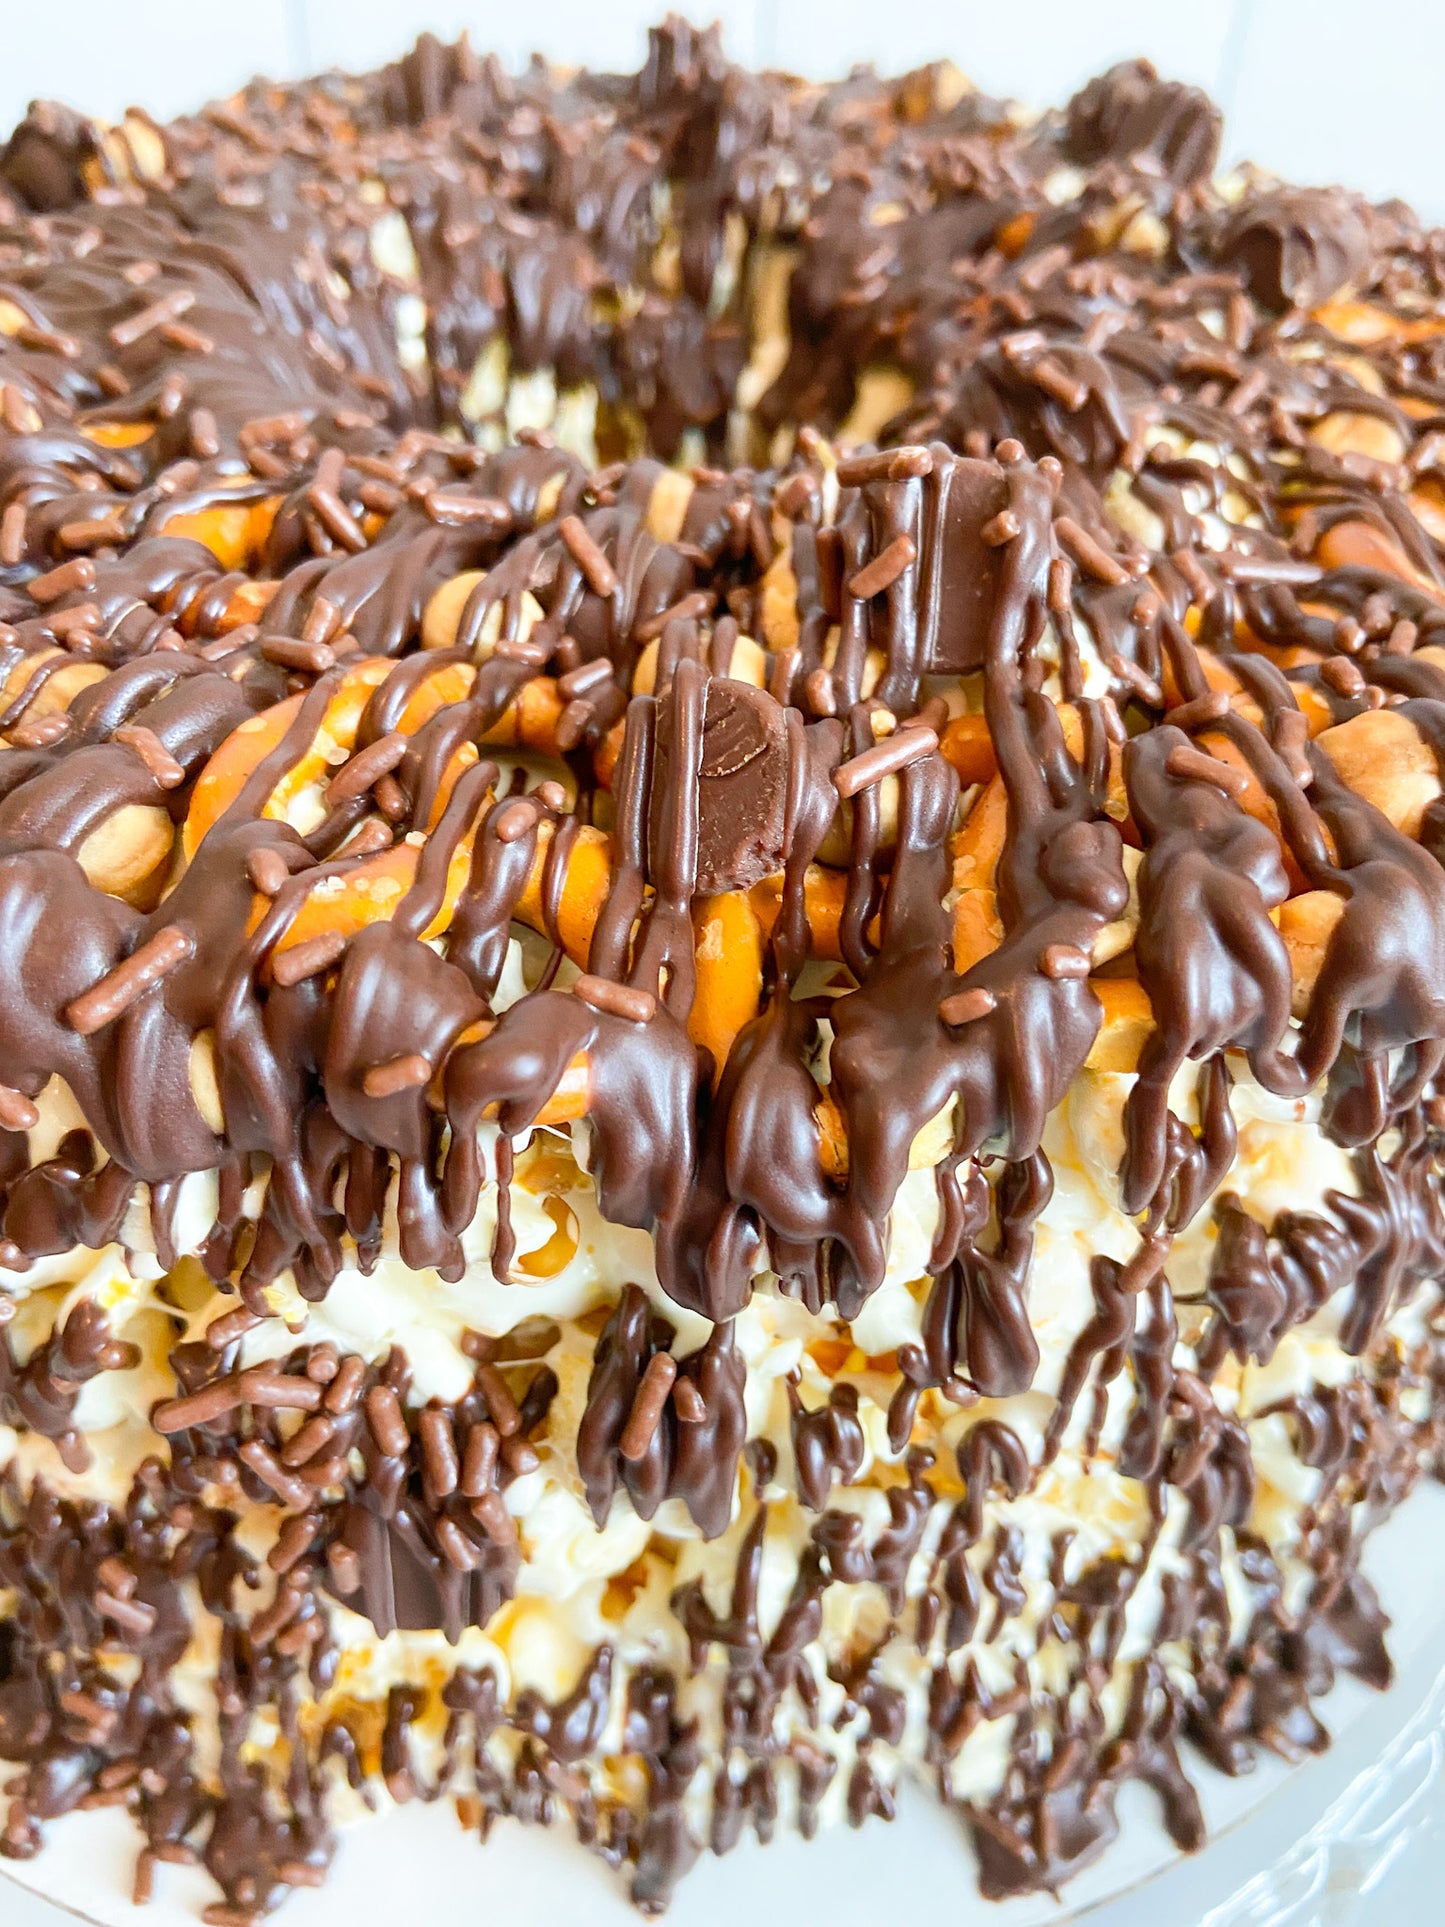 Caramel Lover's Gourmet Popcorn Cake